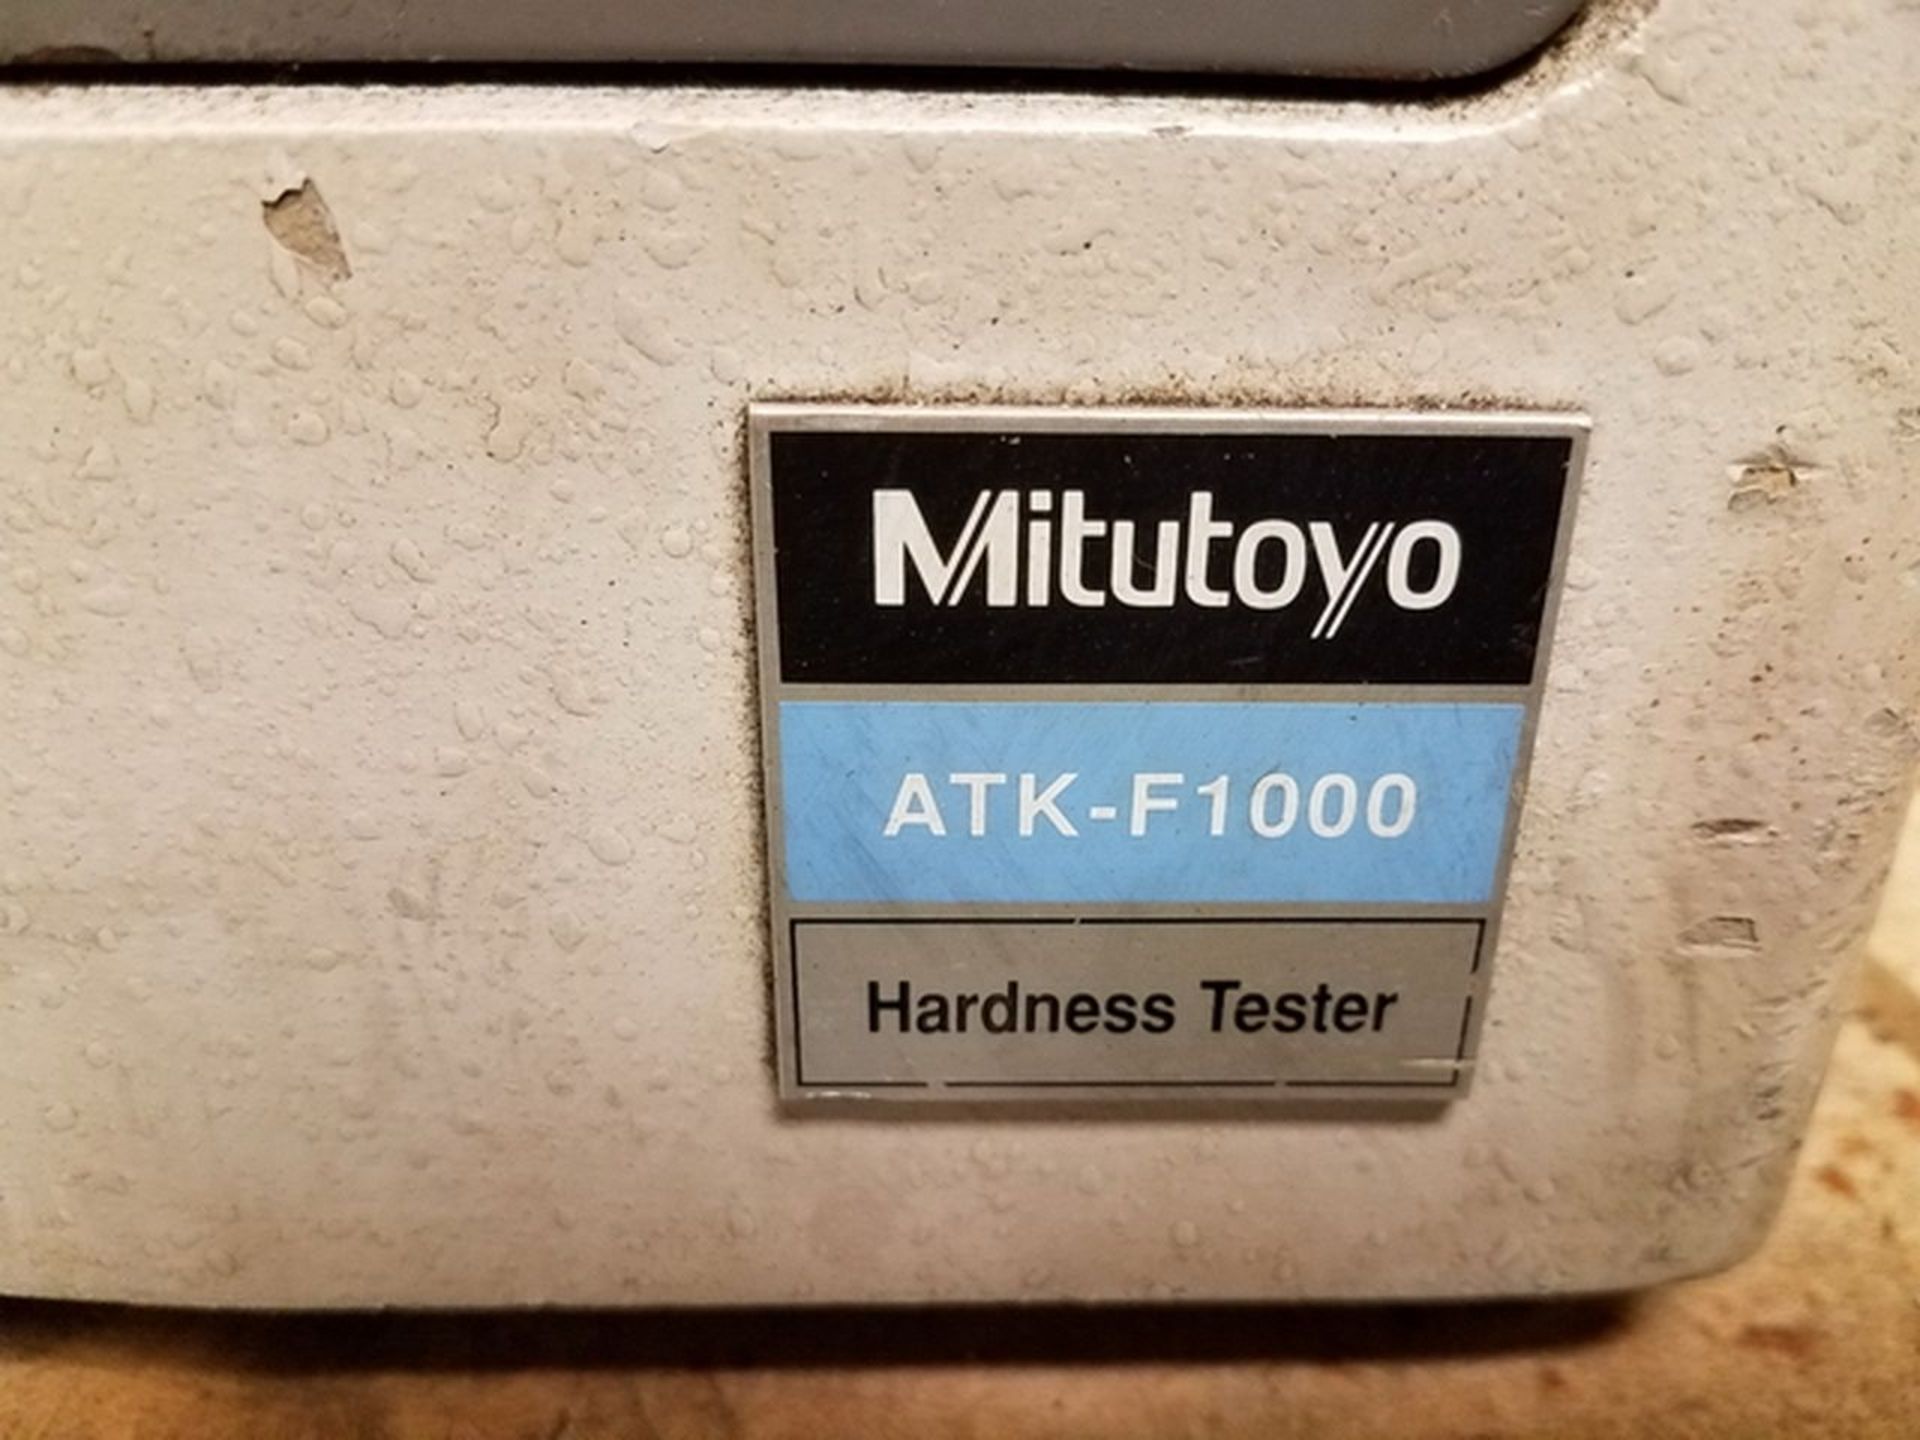 Mitutoyo ATK-F1000 Hardness Tester. A# 17625. Loc: Basement Training Room 1. (Bsmt Training Room 1) - Image 2 of 2